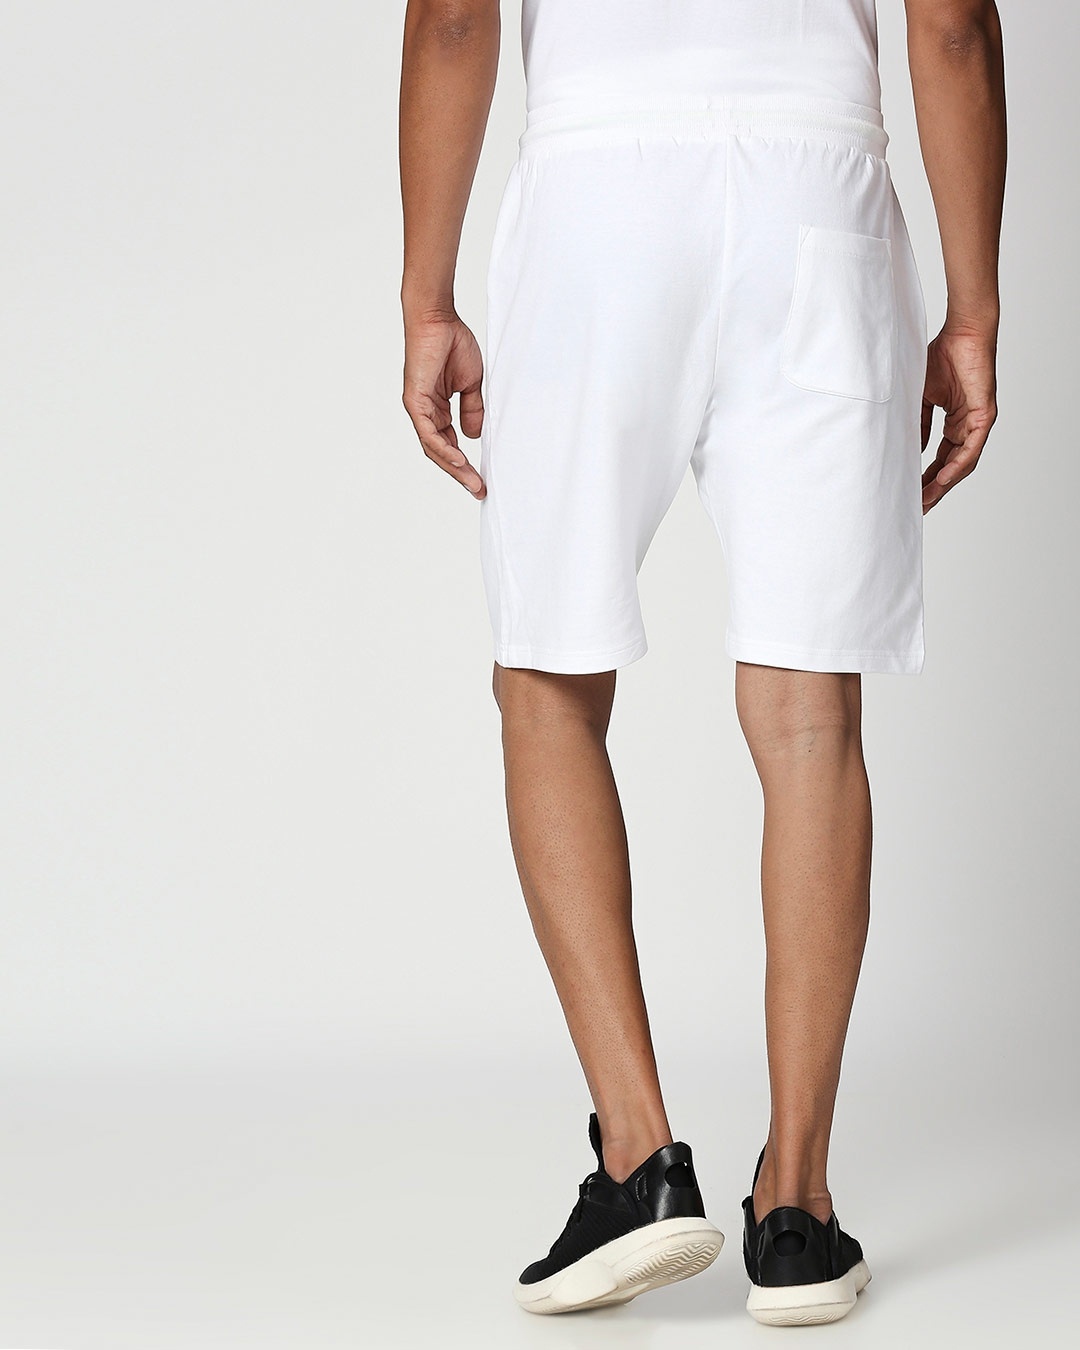 Shop White-Neon Lime Reflector Shorts-Design